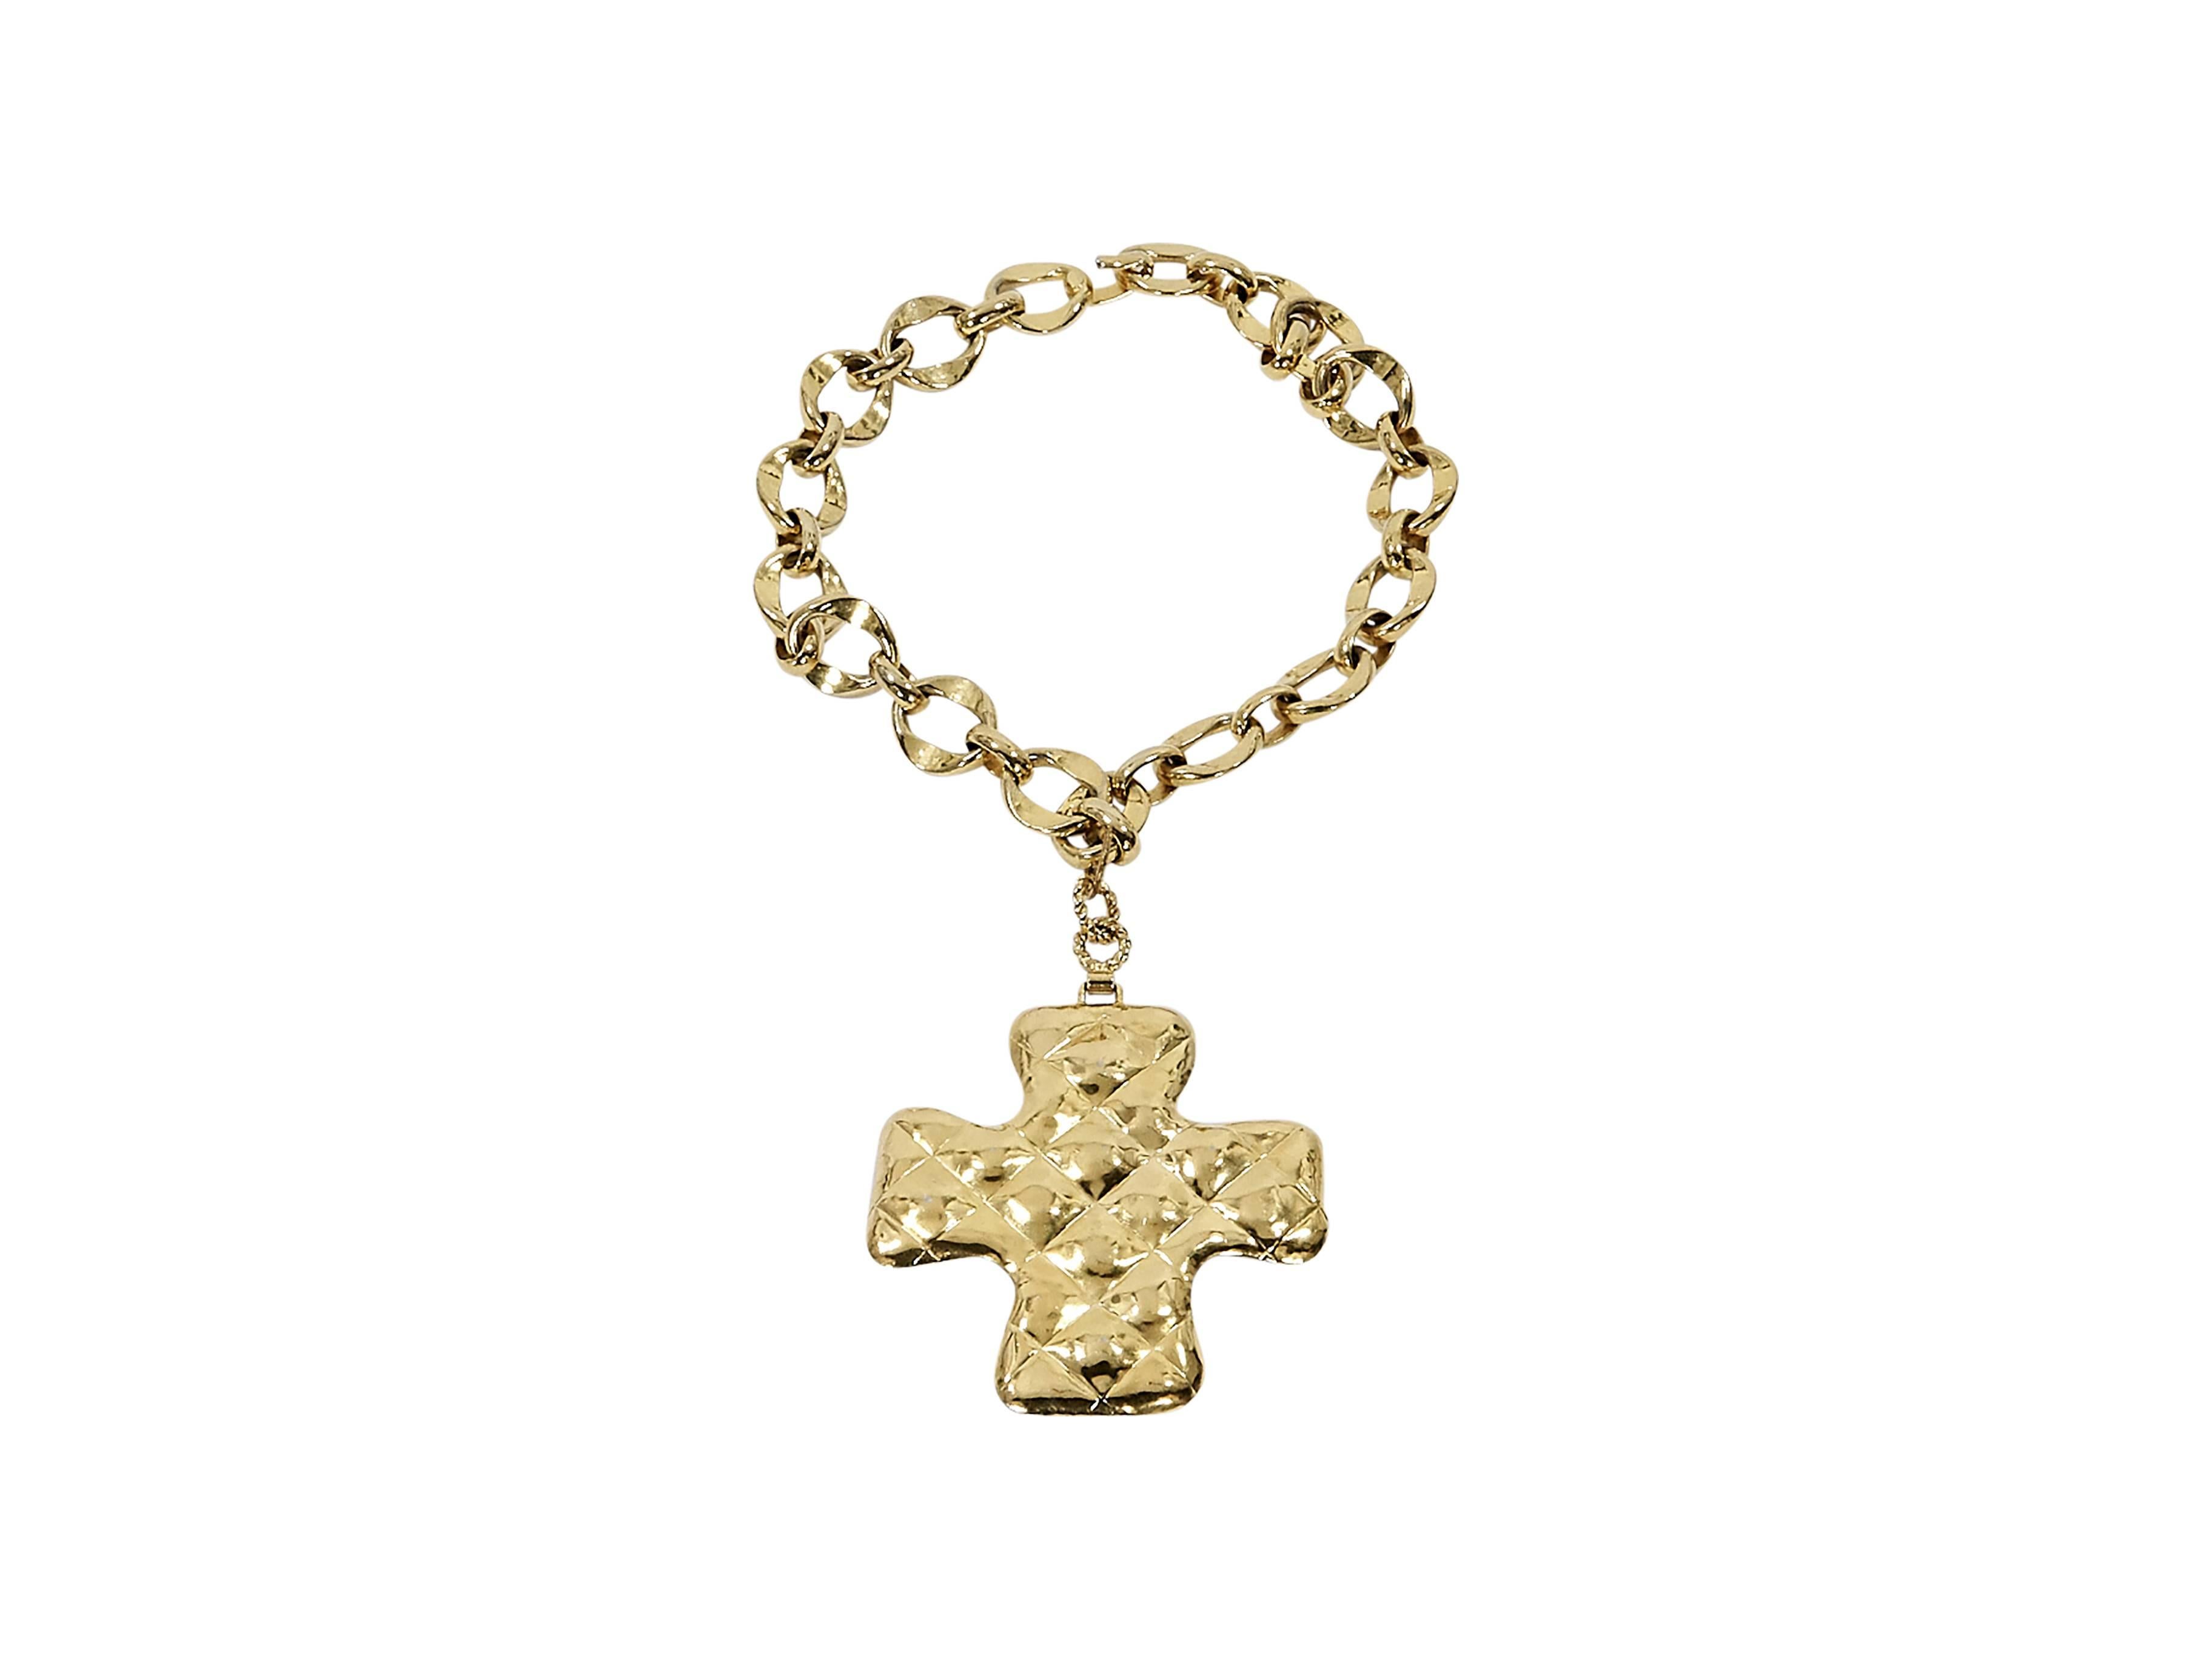 Product details:  Vintage goldtone cross pendant necklace by Chanel.  Large cross pendant.  Hook closure.  17.5